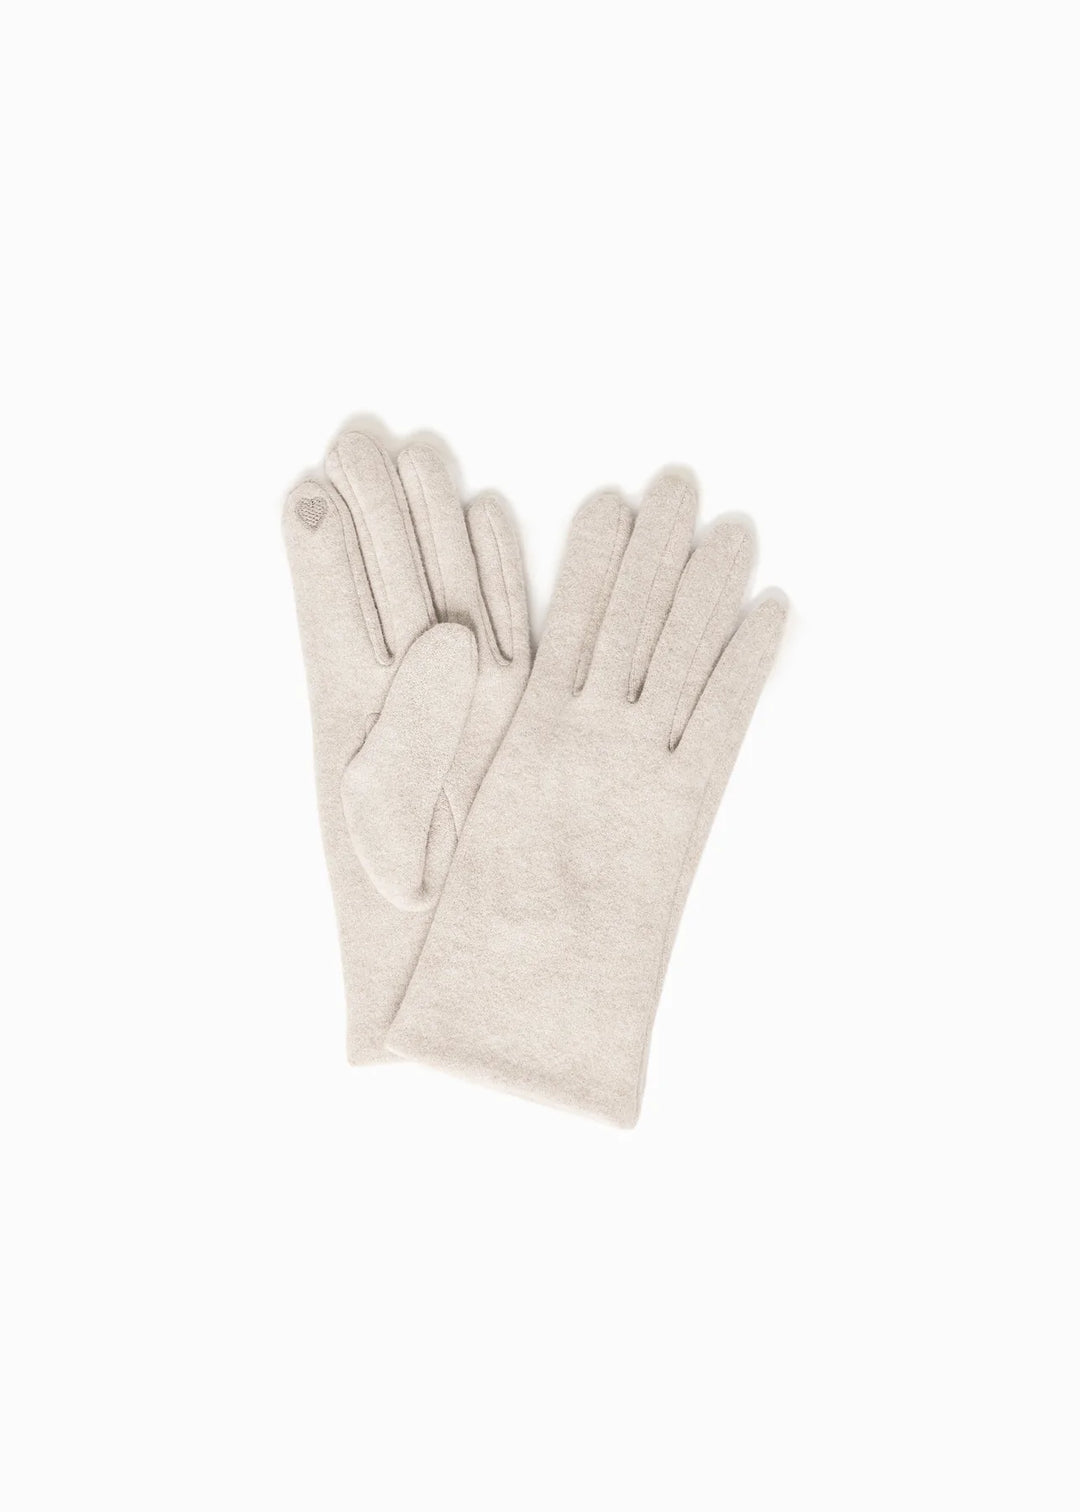 Shari Gloves in Tan - Madison's Niche 